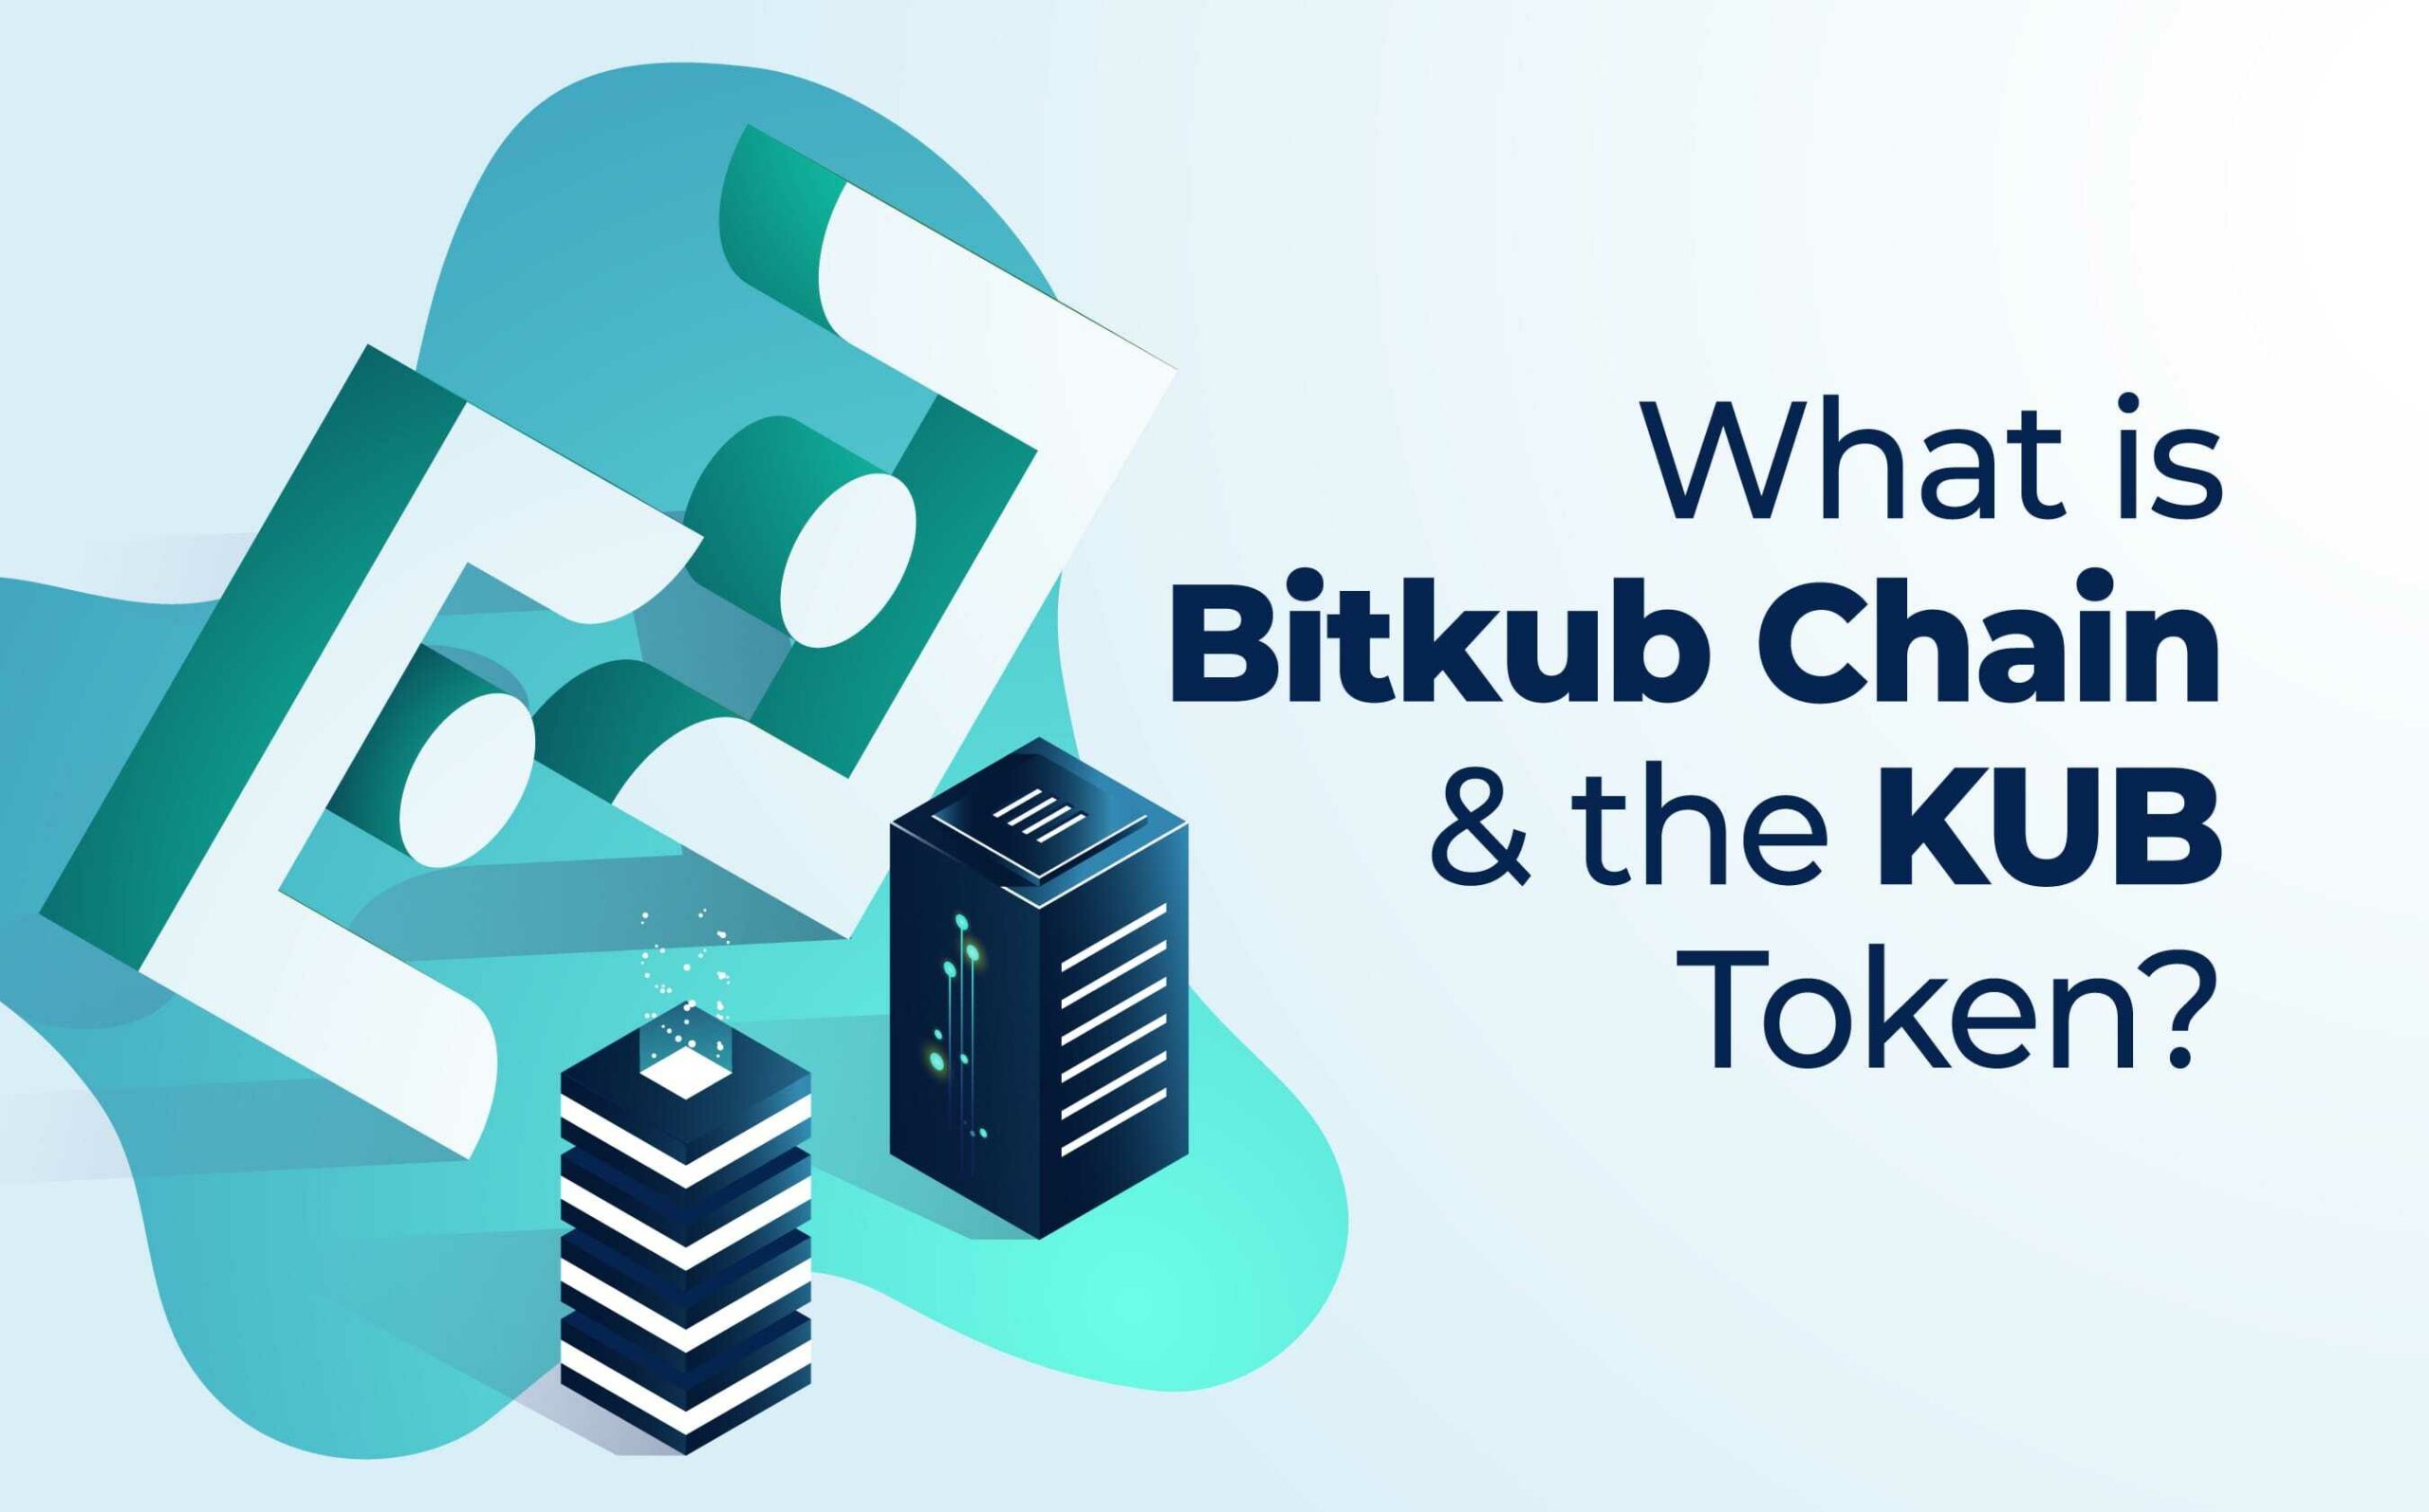 What is Bitkub Chain and Bitkub Coin? - Moralis Academy